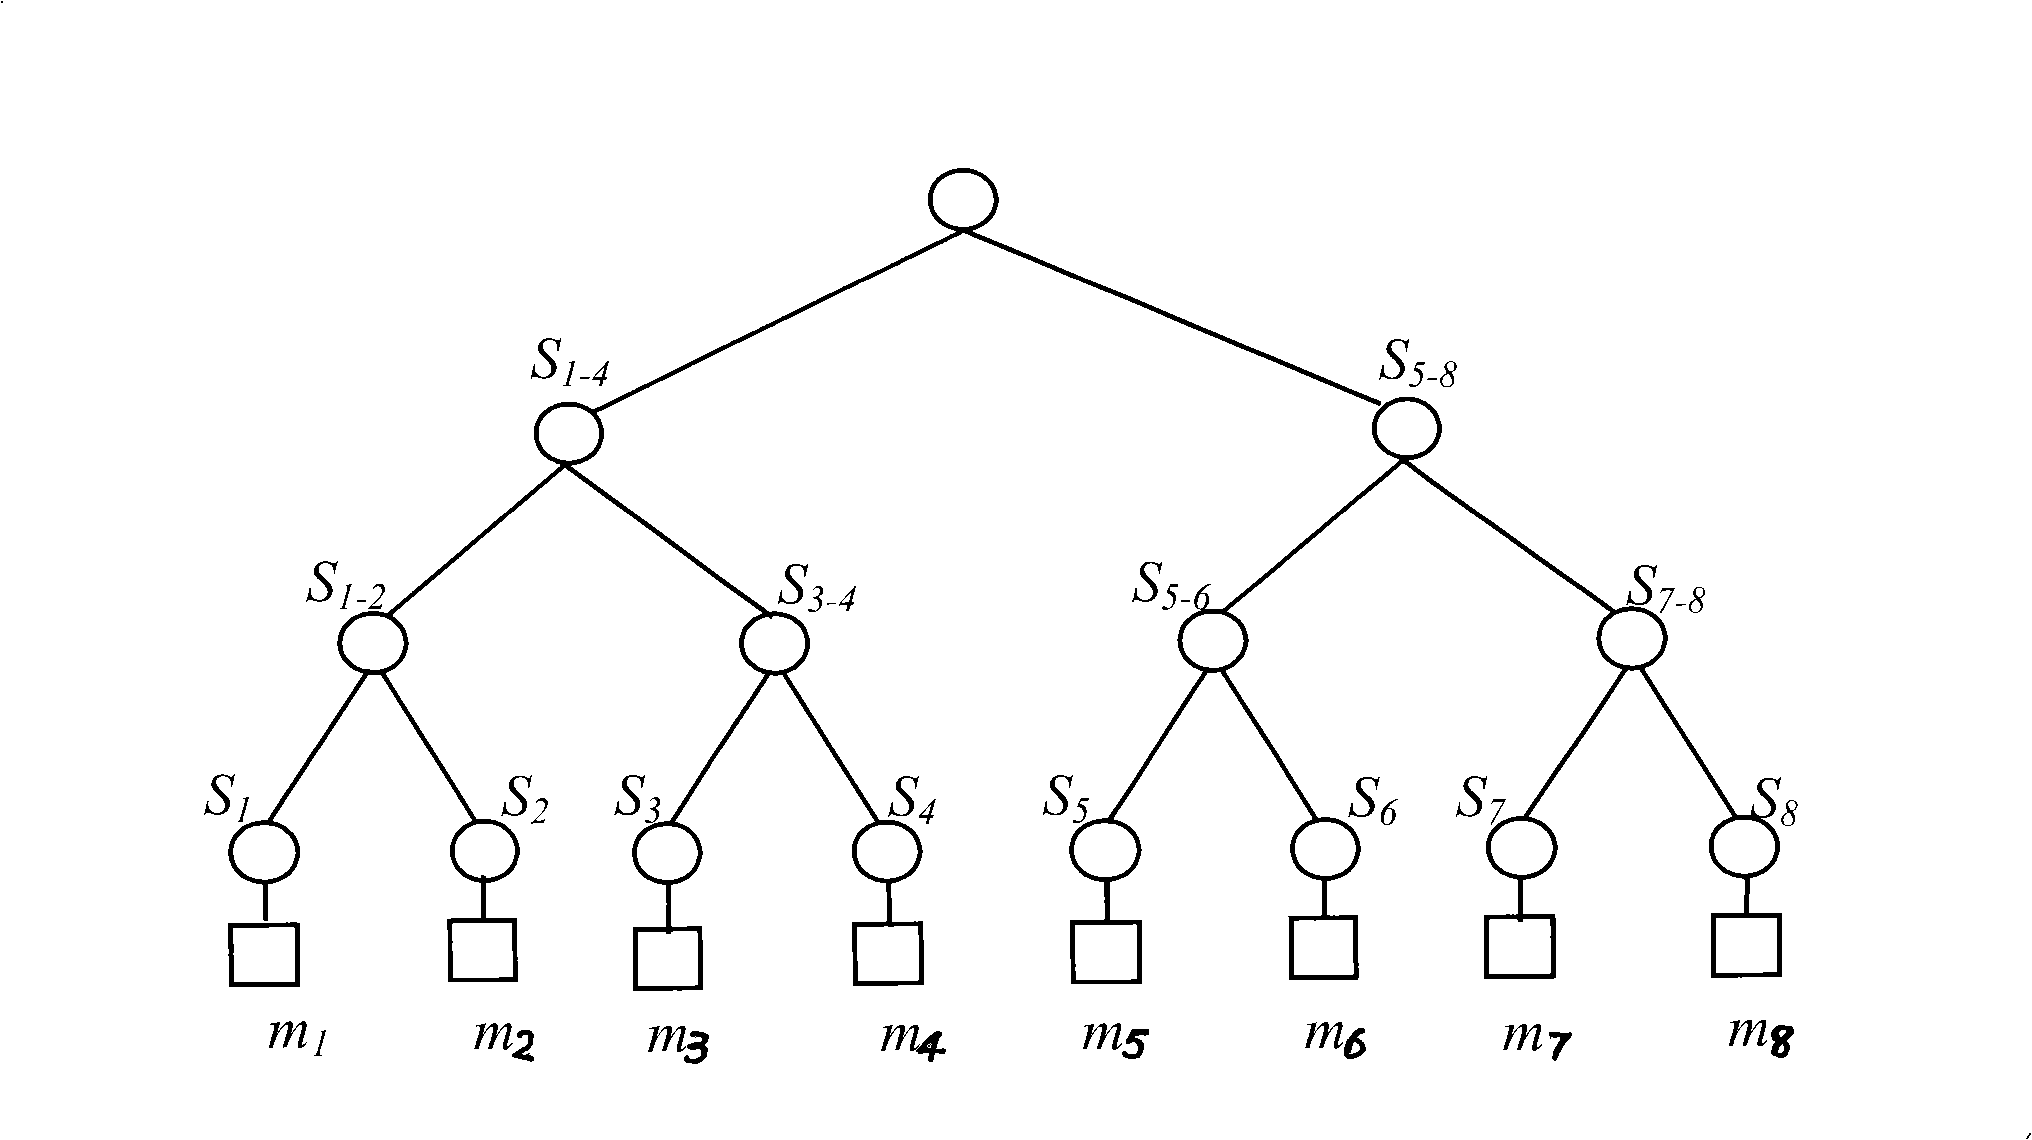 Uni-directional function tree multicast key management method based on cipher sharing